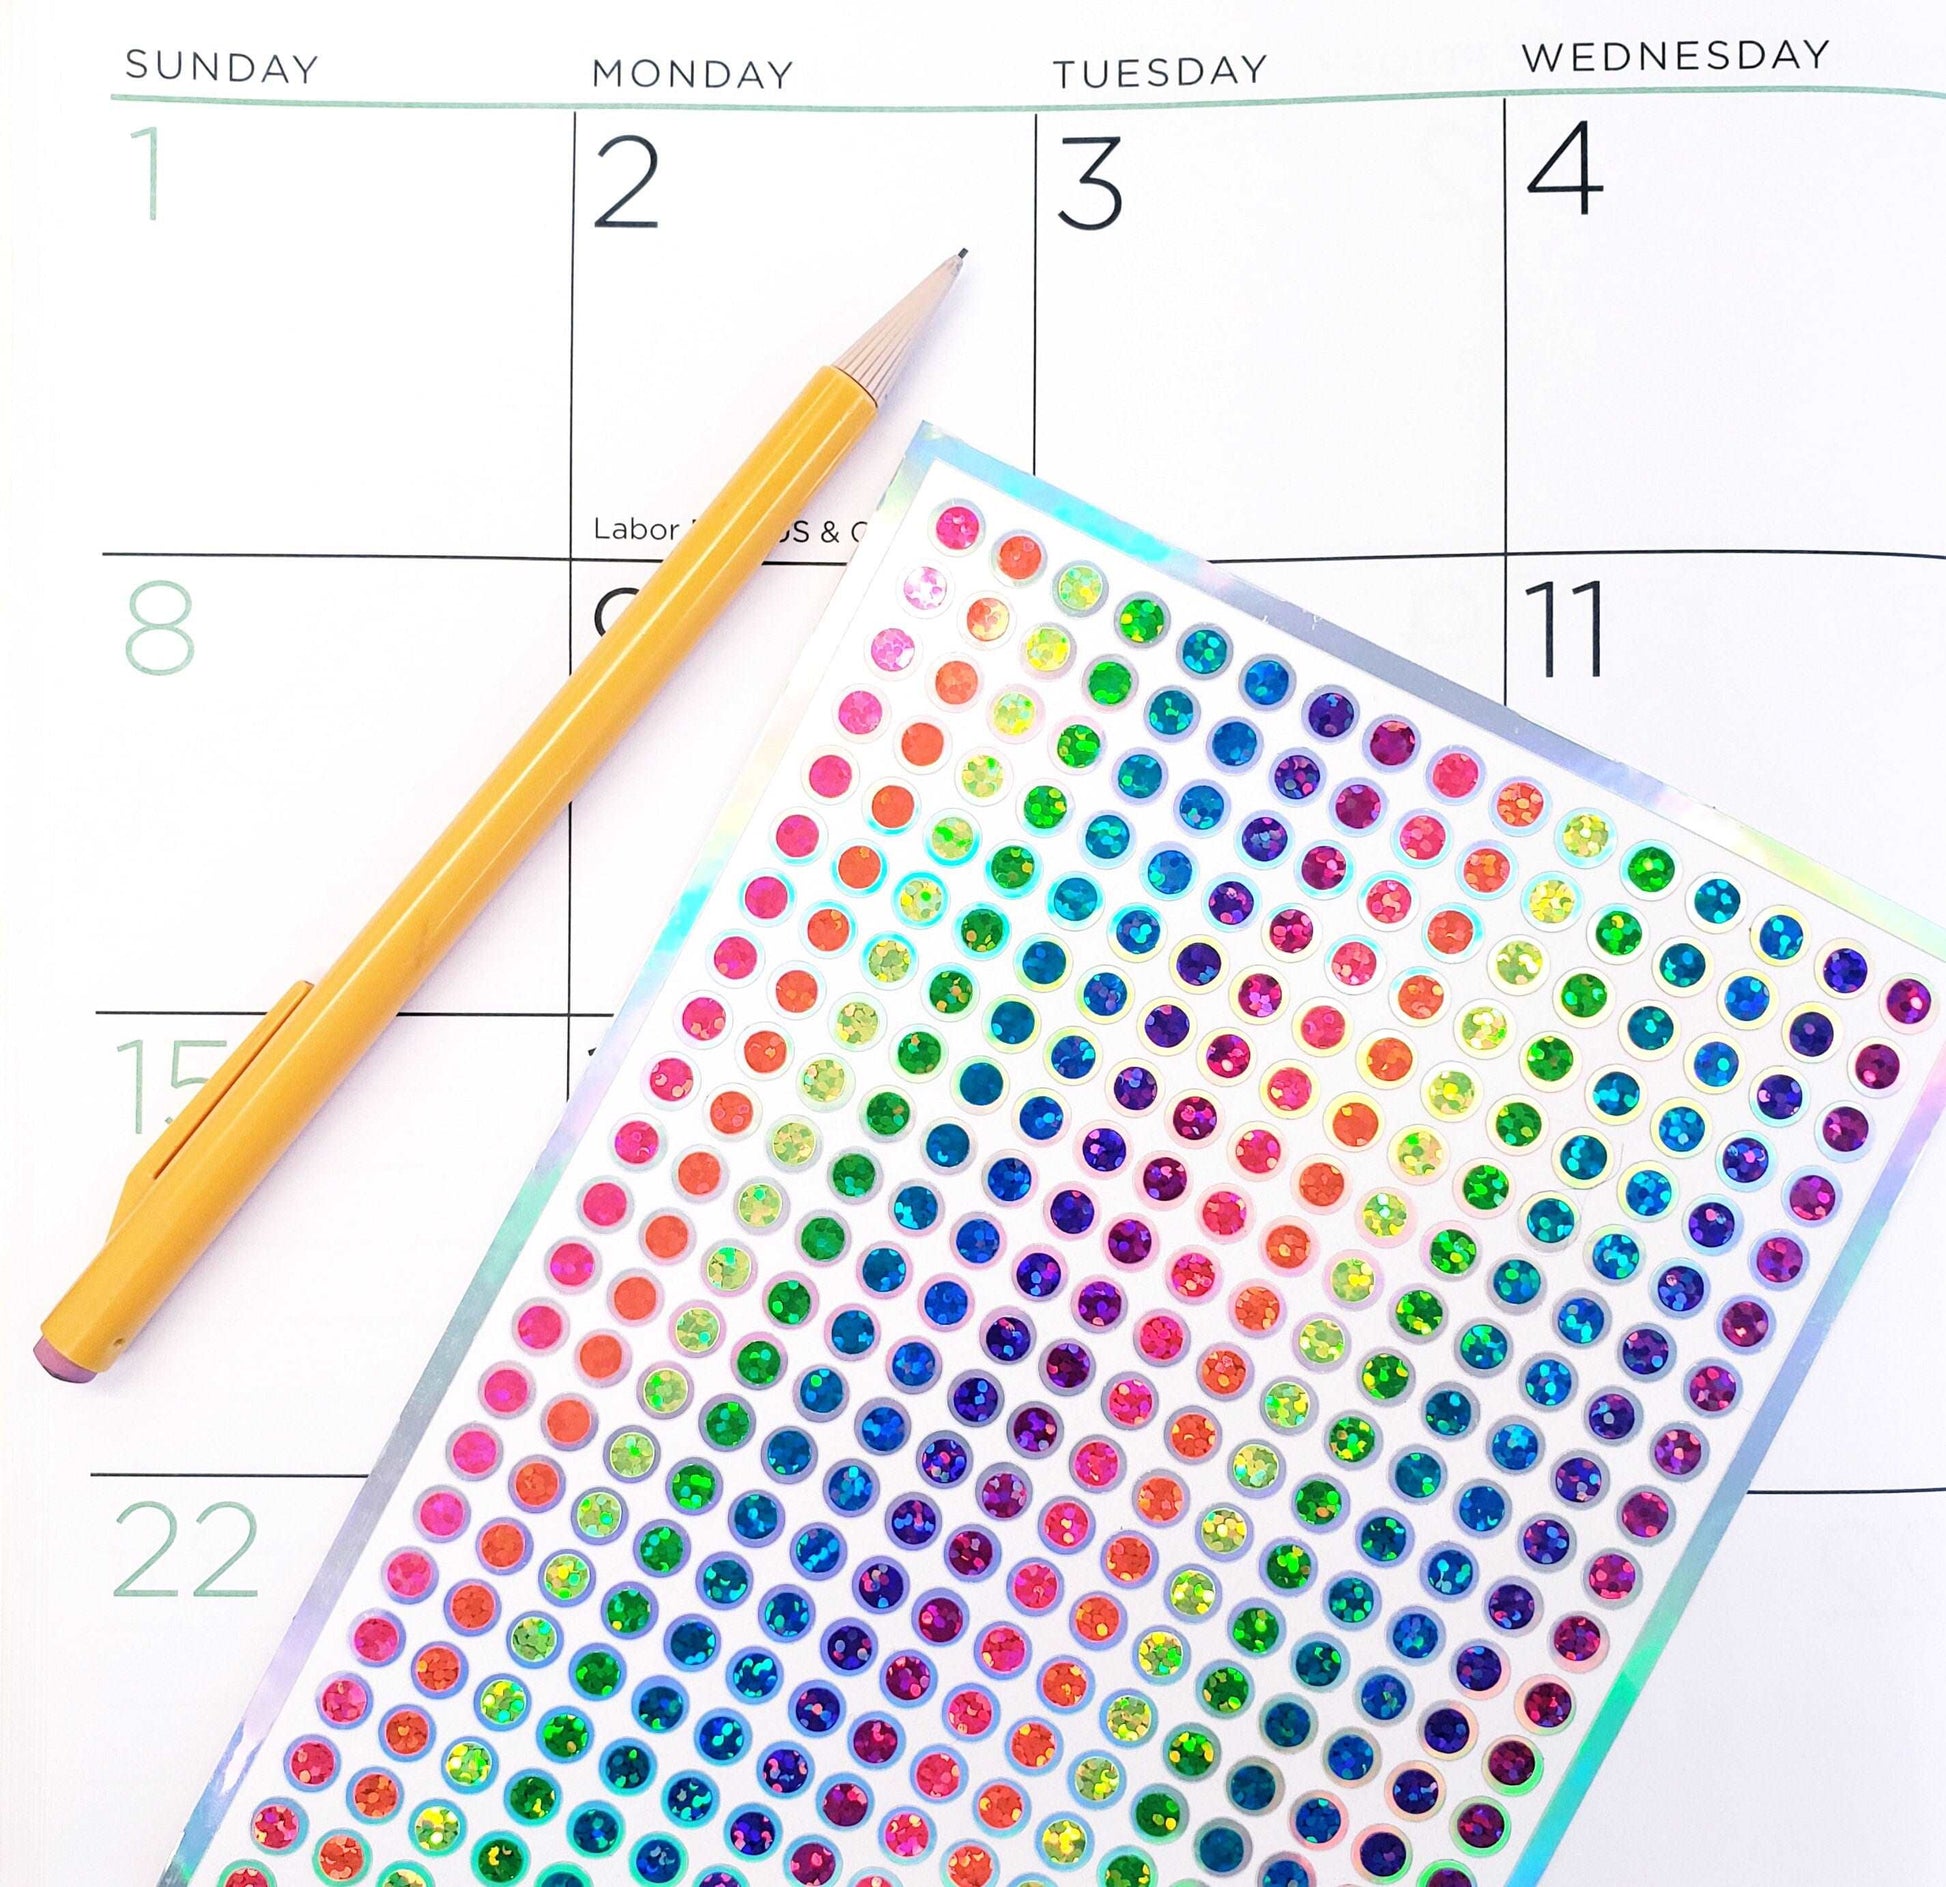 Neon Rainbow Dots Stickers, set of 368